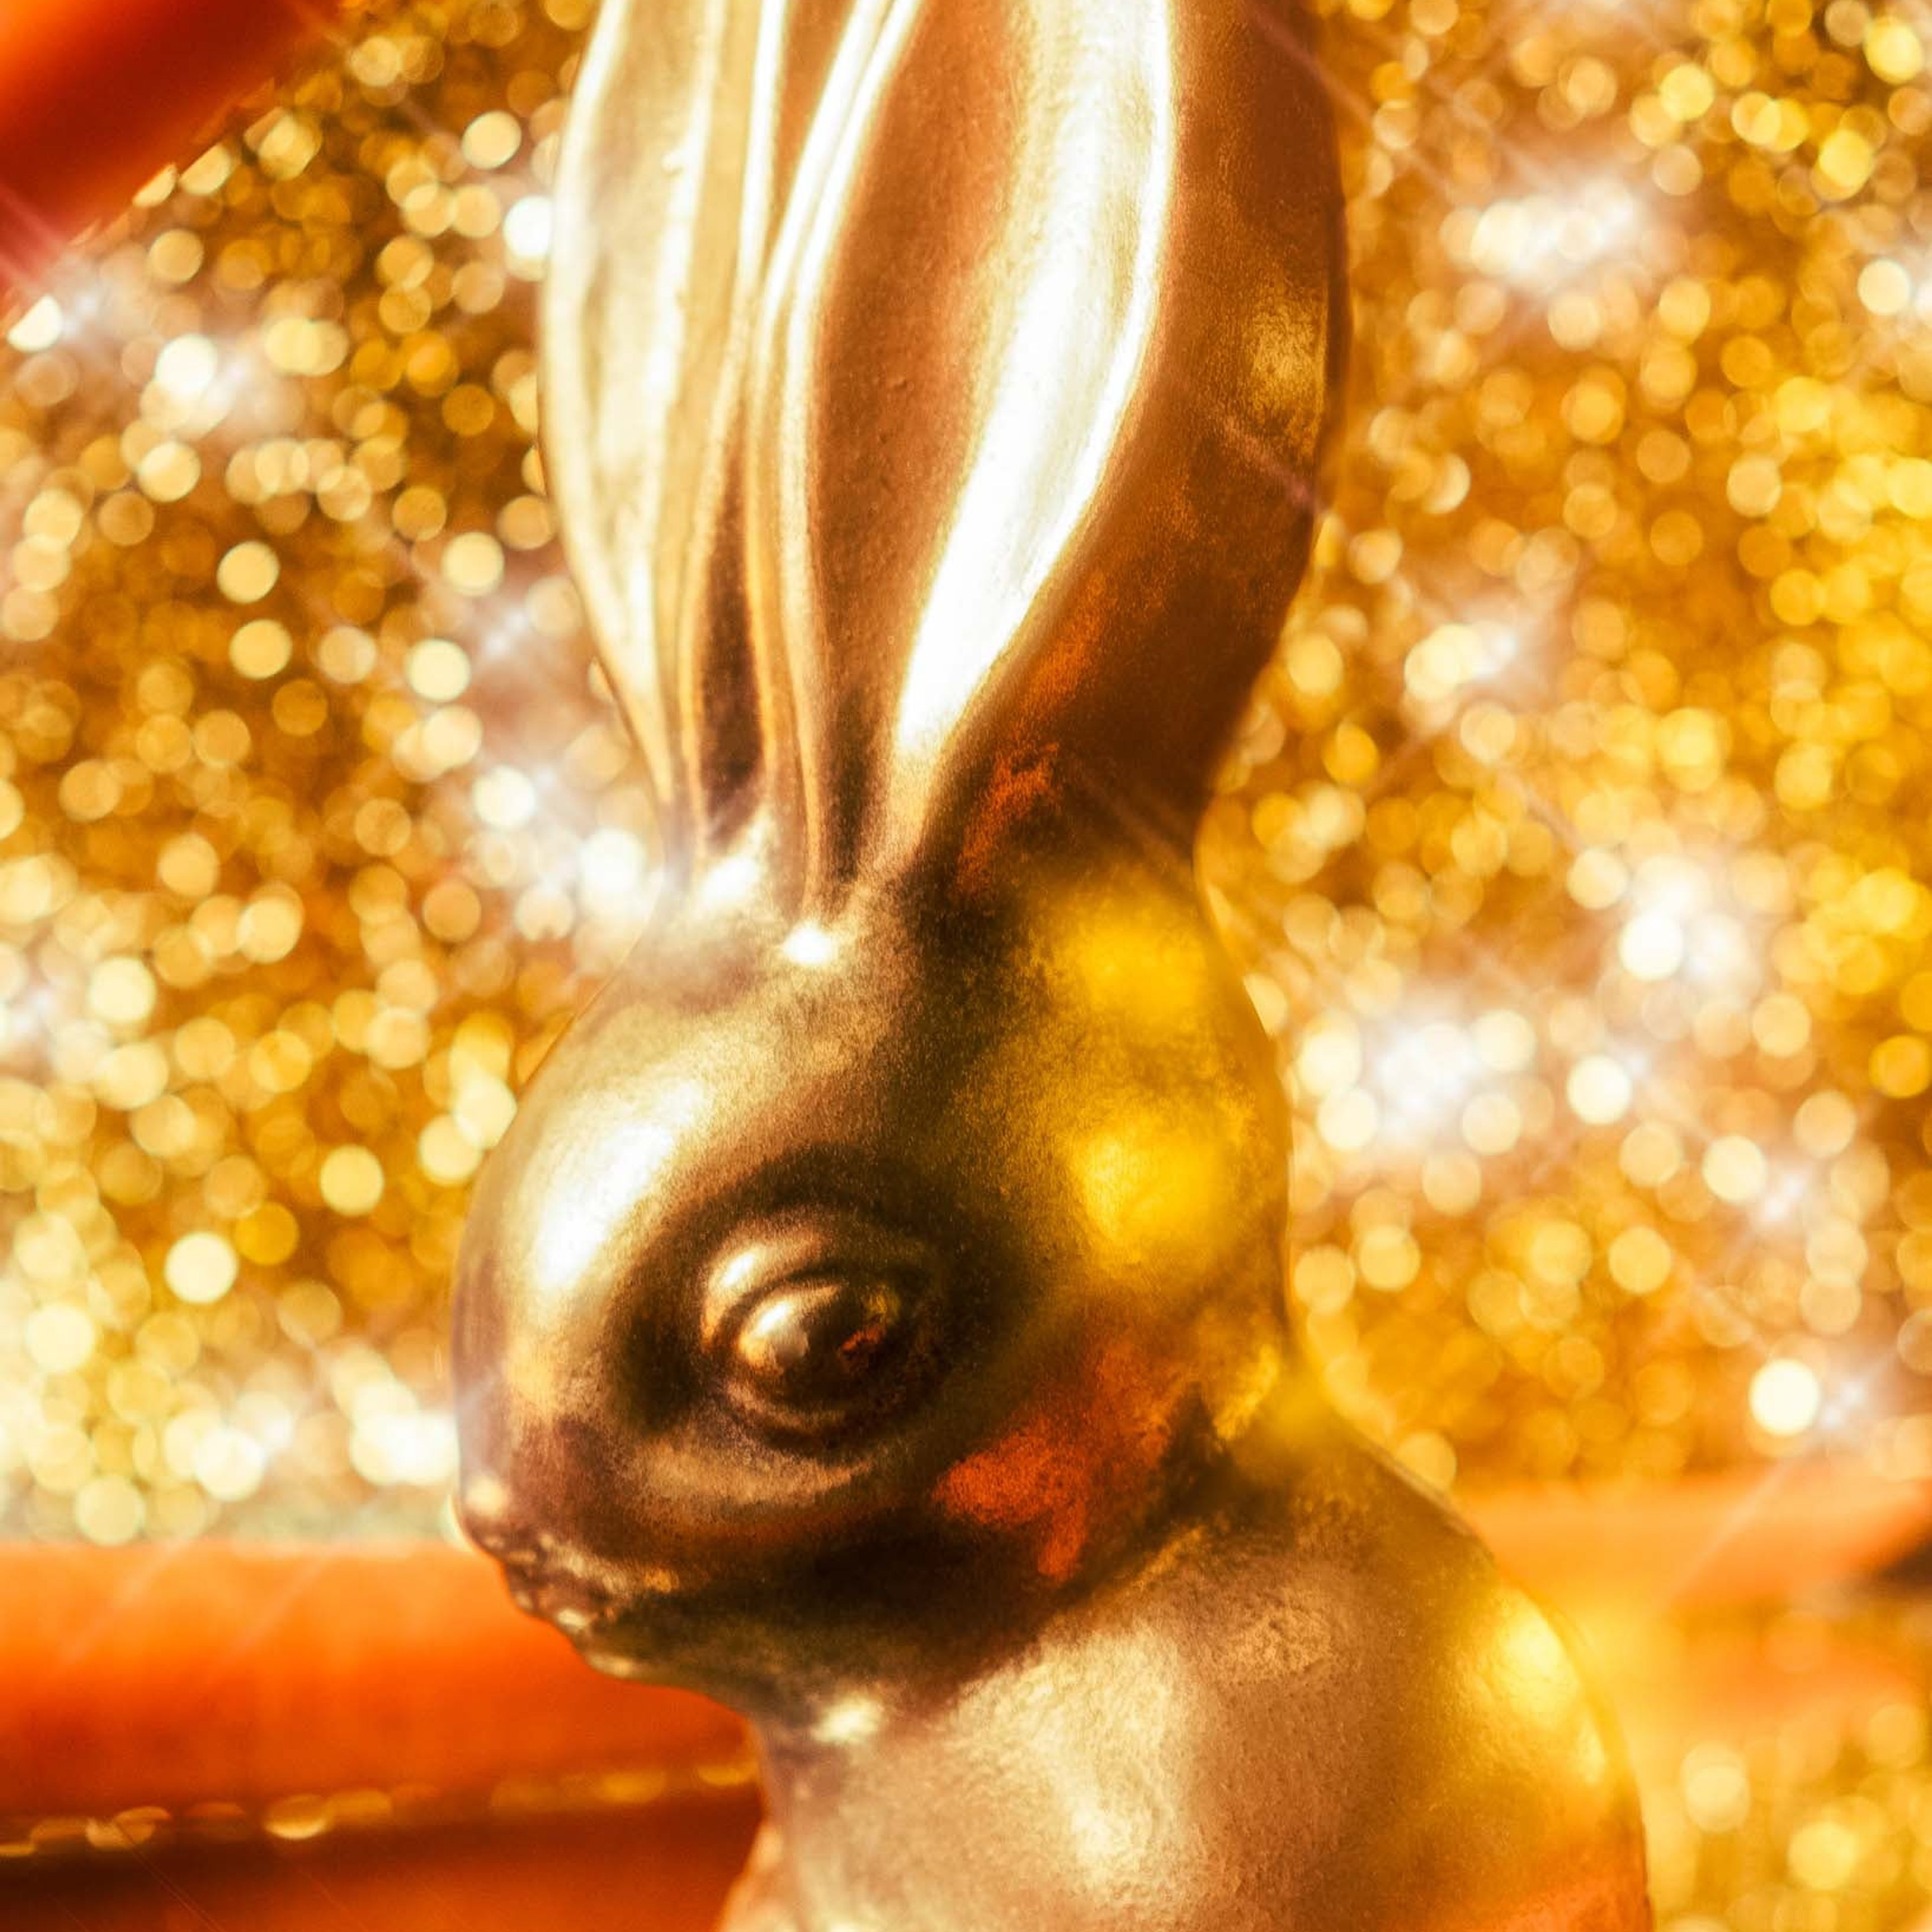 Big Eared 24 Karat Gold Easter Bunny